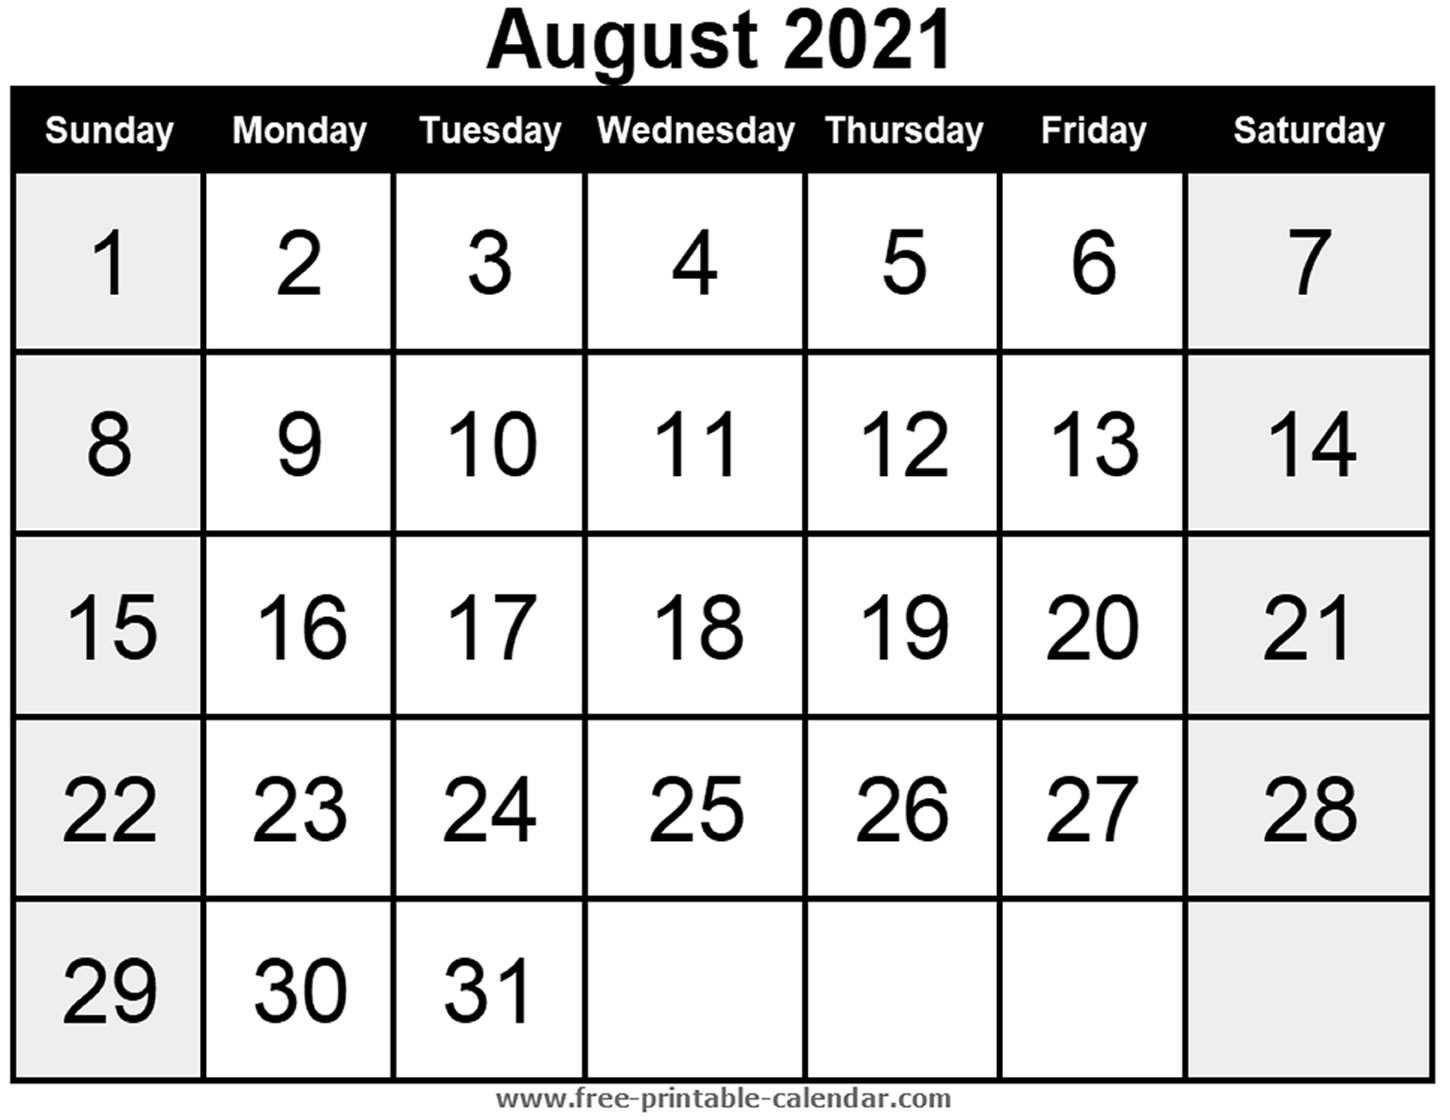 Blank Calendar August 2021 - Free-Printable-Calendar Blank August 2021 Calendar